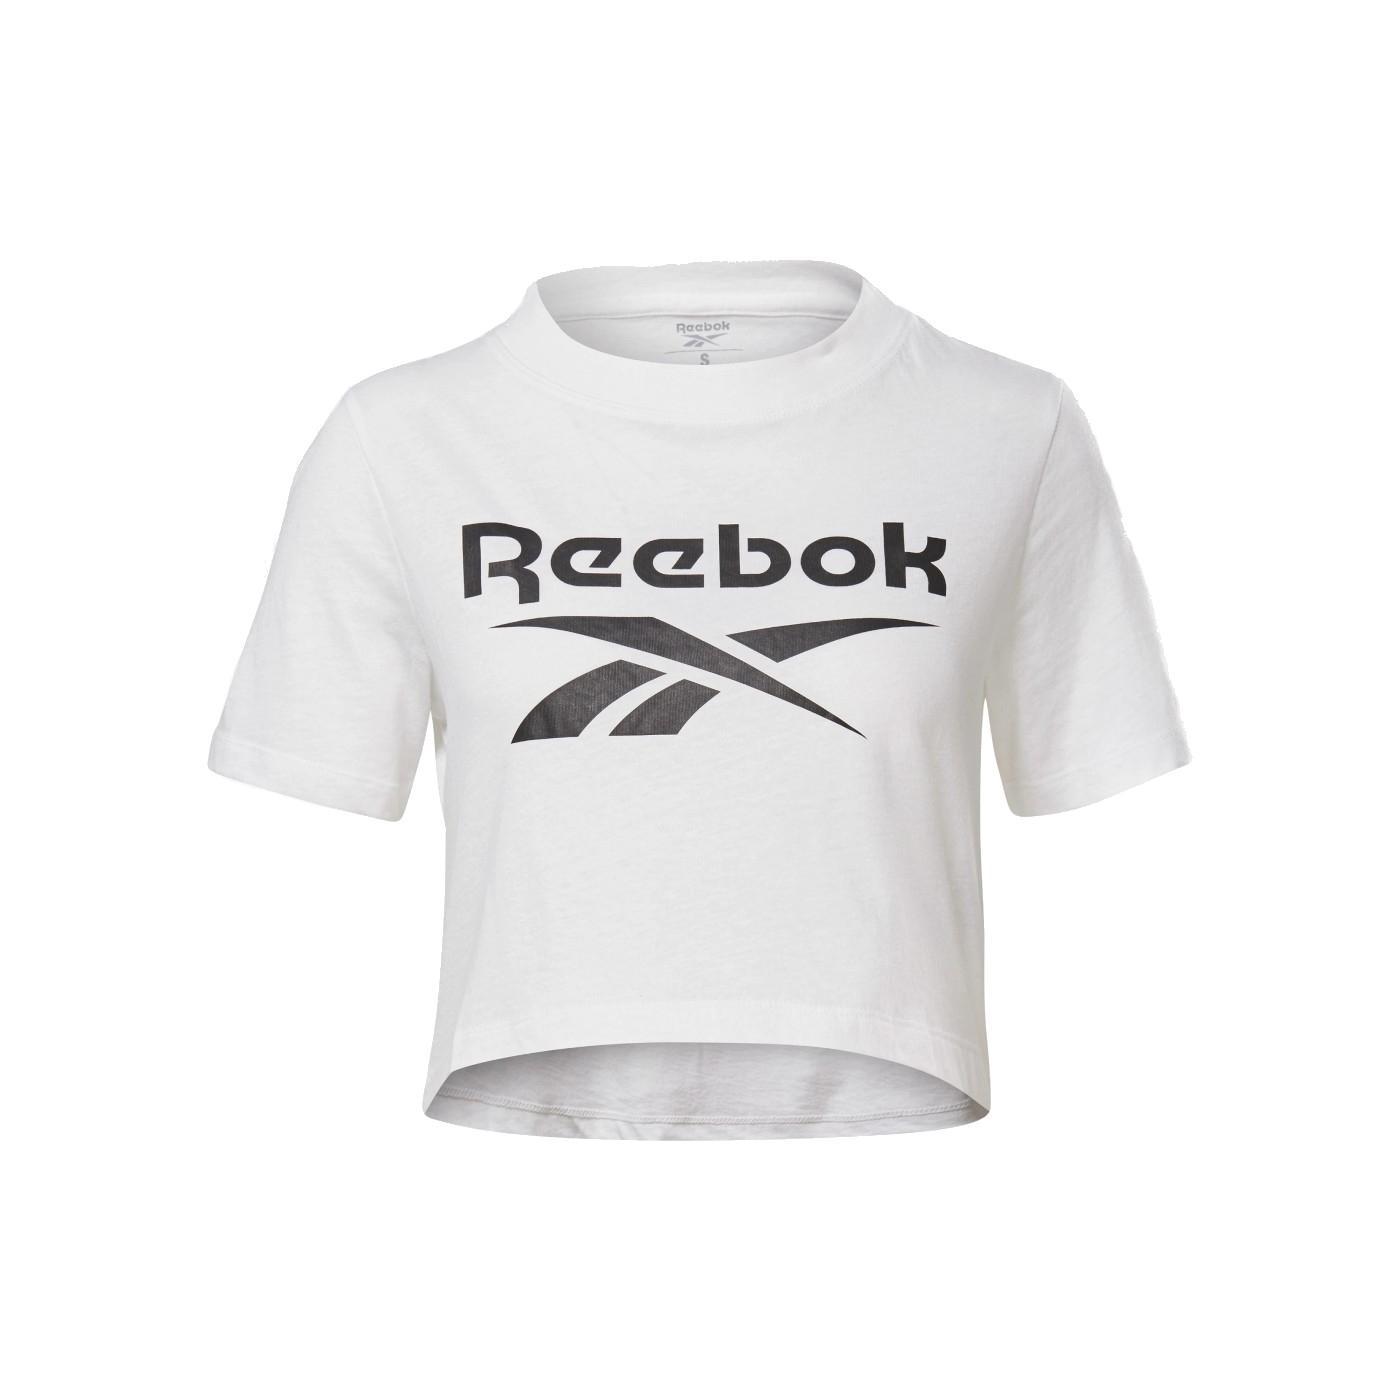 Reebok - Camiseta Reebok Estilo Crop Top de Manga Corta